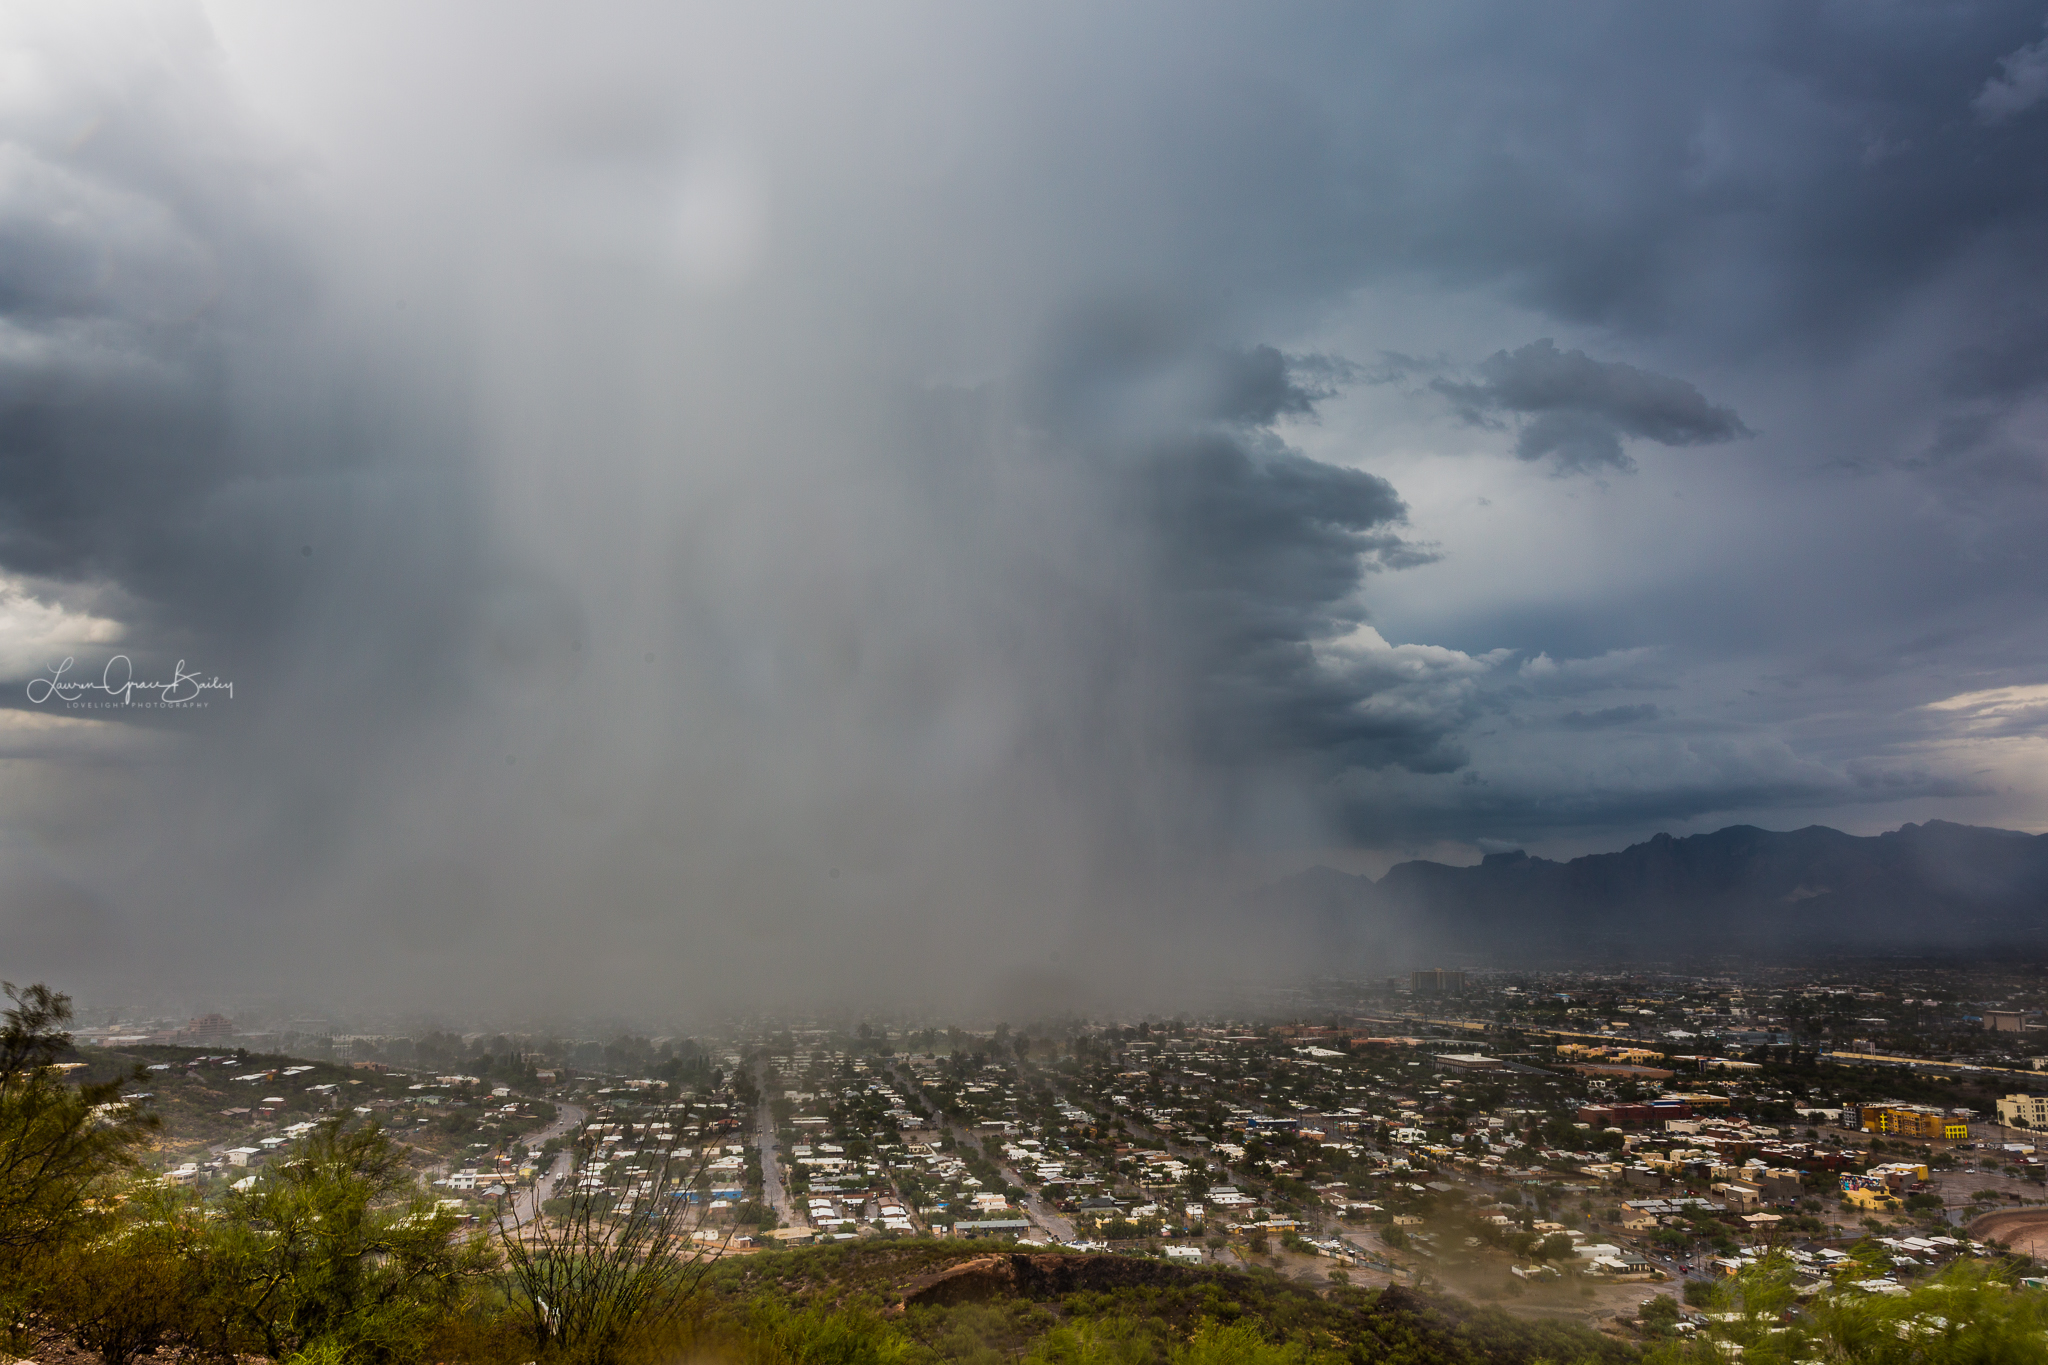 Downpour unleashes 2 inches of rain in Tucson by Lori Grace Bailey @lorigraceaz